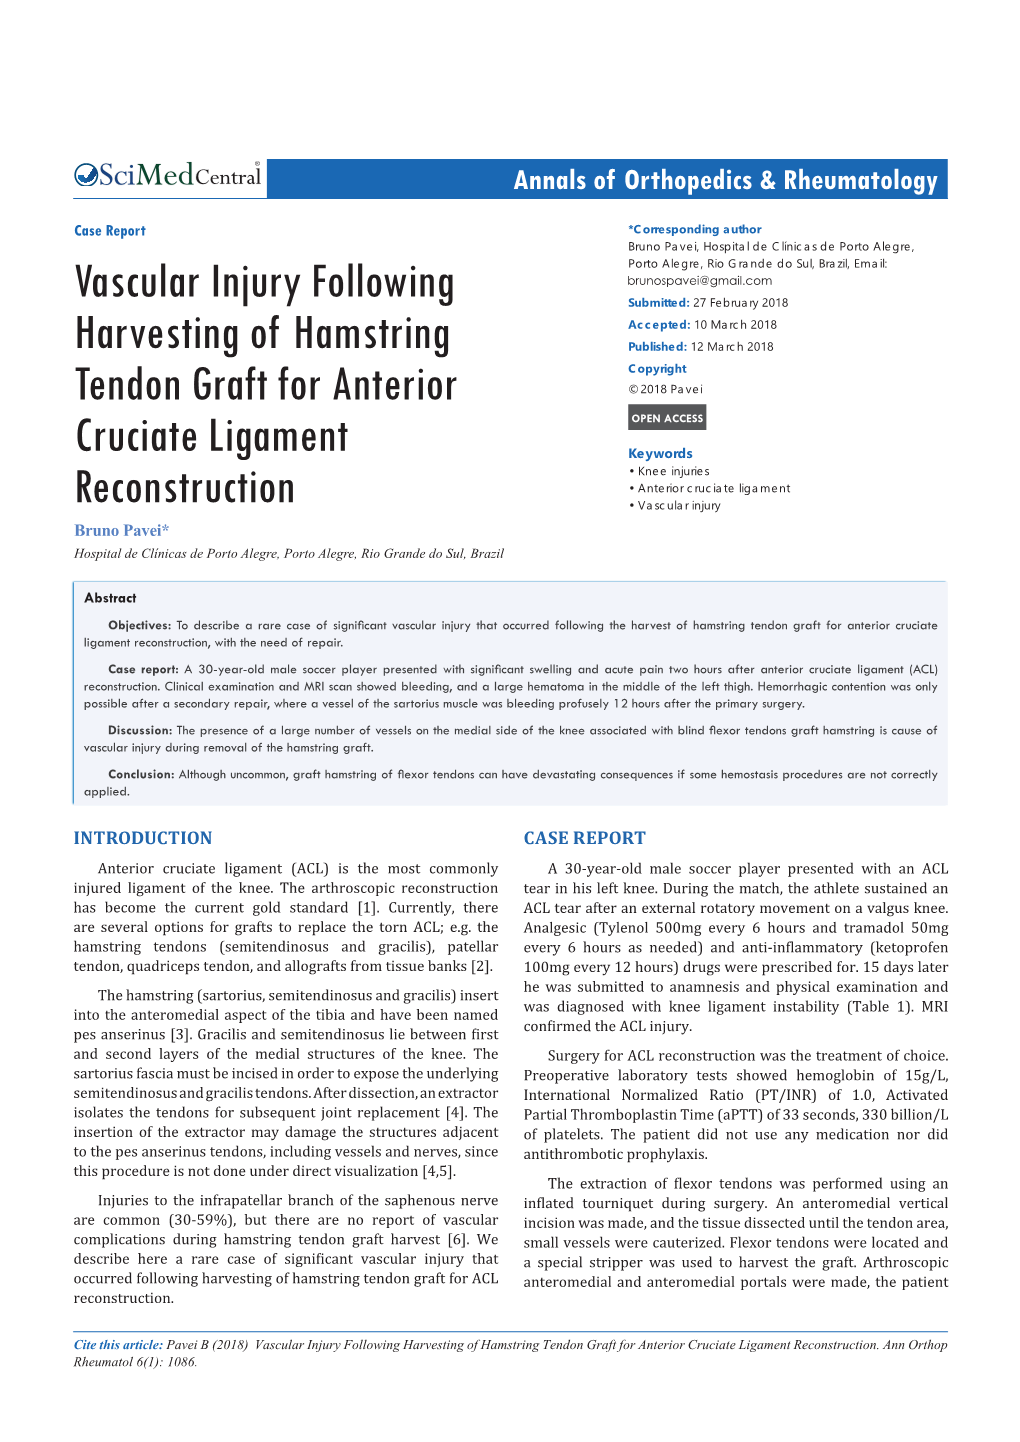 Vascular Injury Following Harvesting of Hamstring Tendon Graft for Anterior Cruciate Ligament Reconstruction